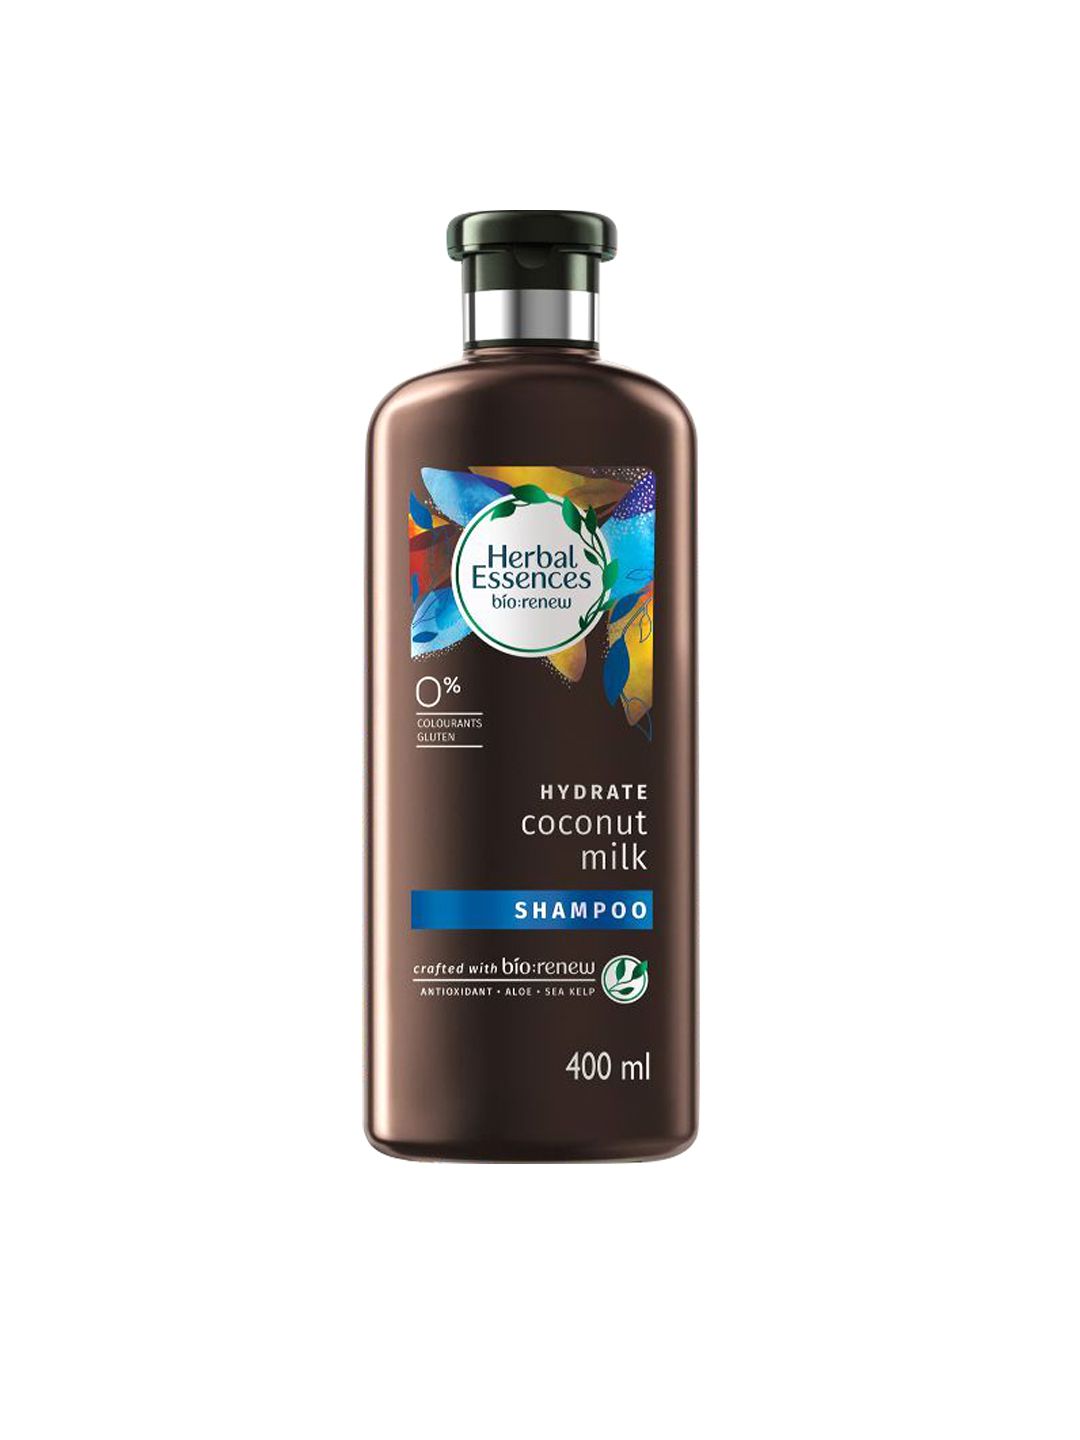 Herbal Essences Bio Renew Unisex Hydrate Coconut Milk Shampoo with Coconut Juice 400 ml Price in India